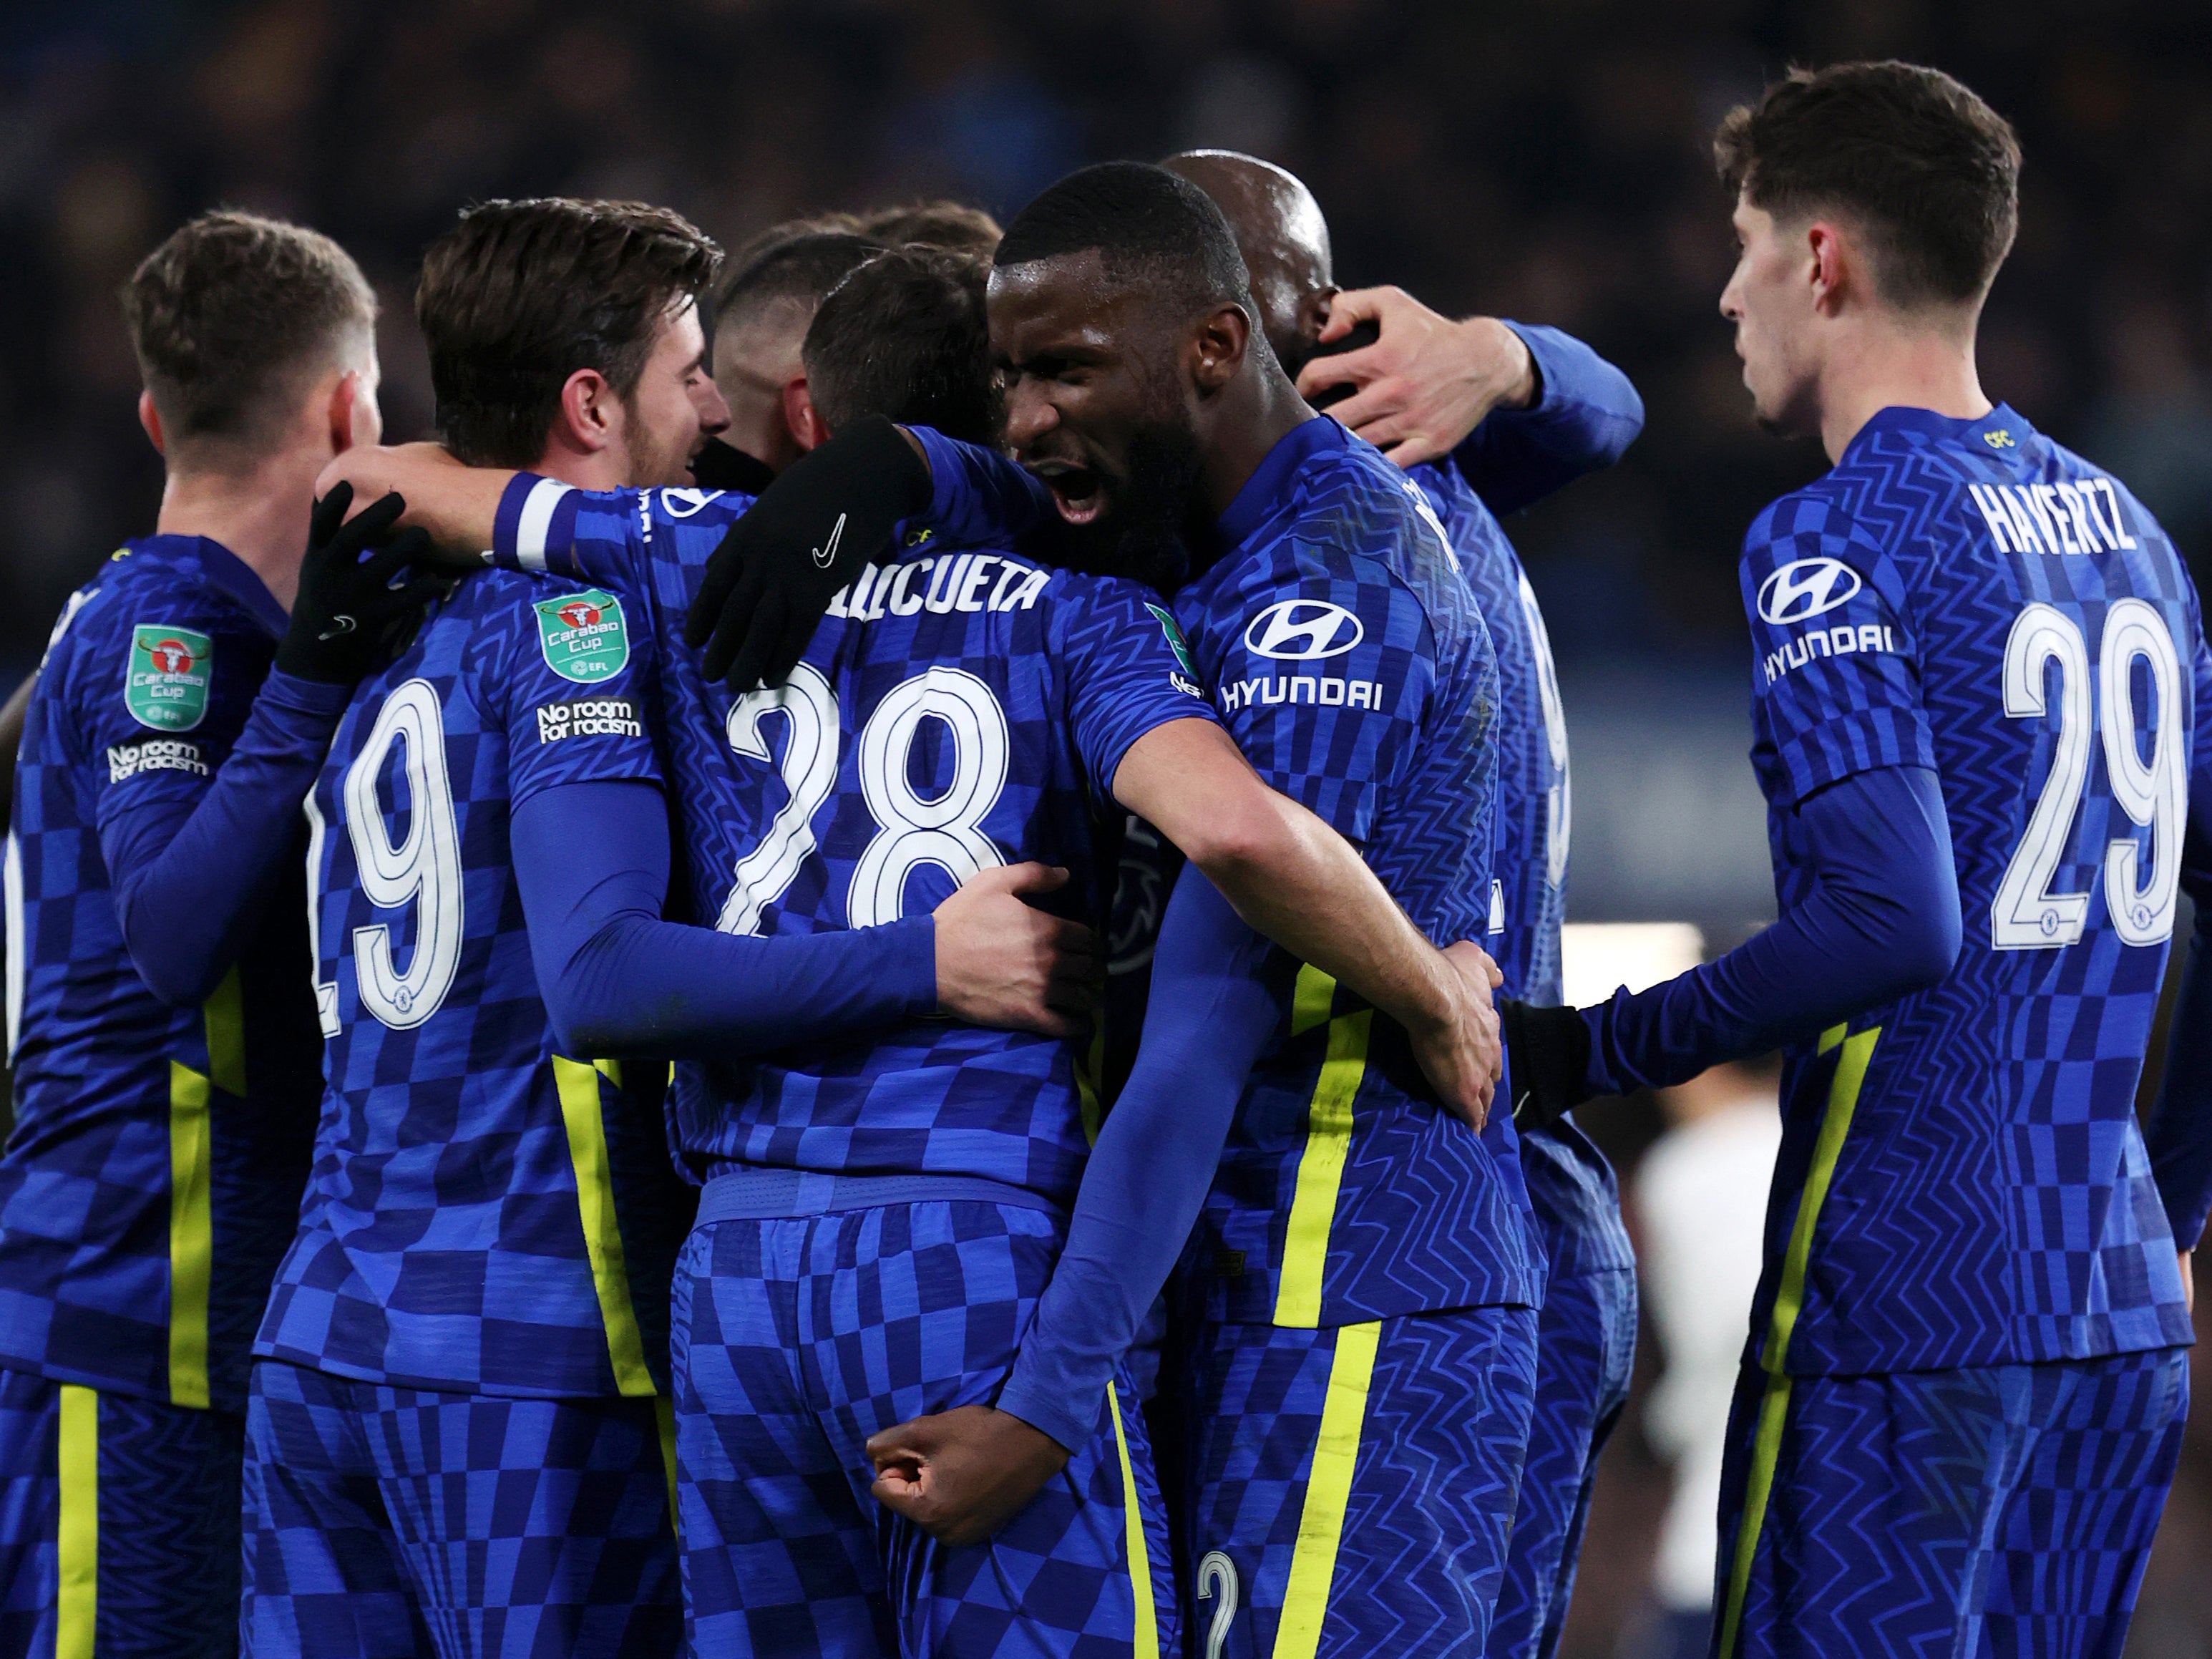 Antonio Rudiger celebrates as Chelsea make it 2-0 at Stamford Bridge over Tottenham